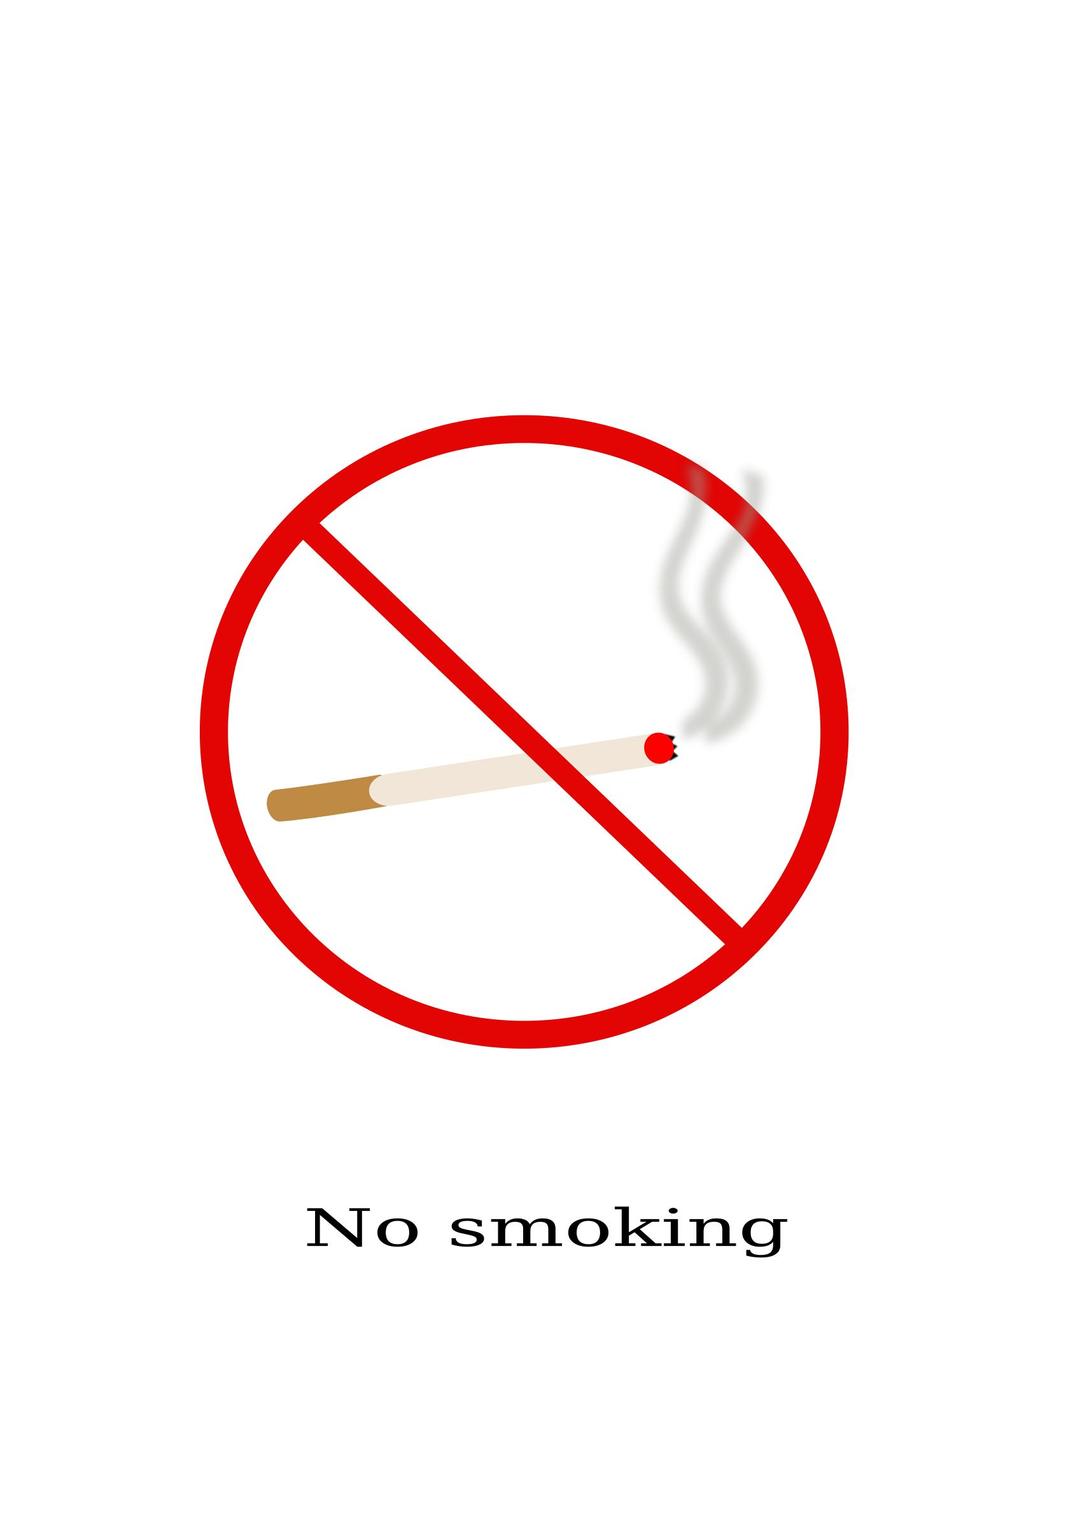 Warning sign - No smoking png transparent